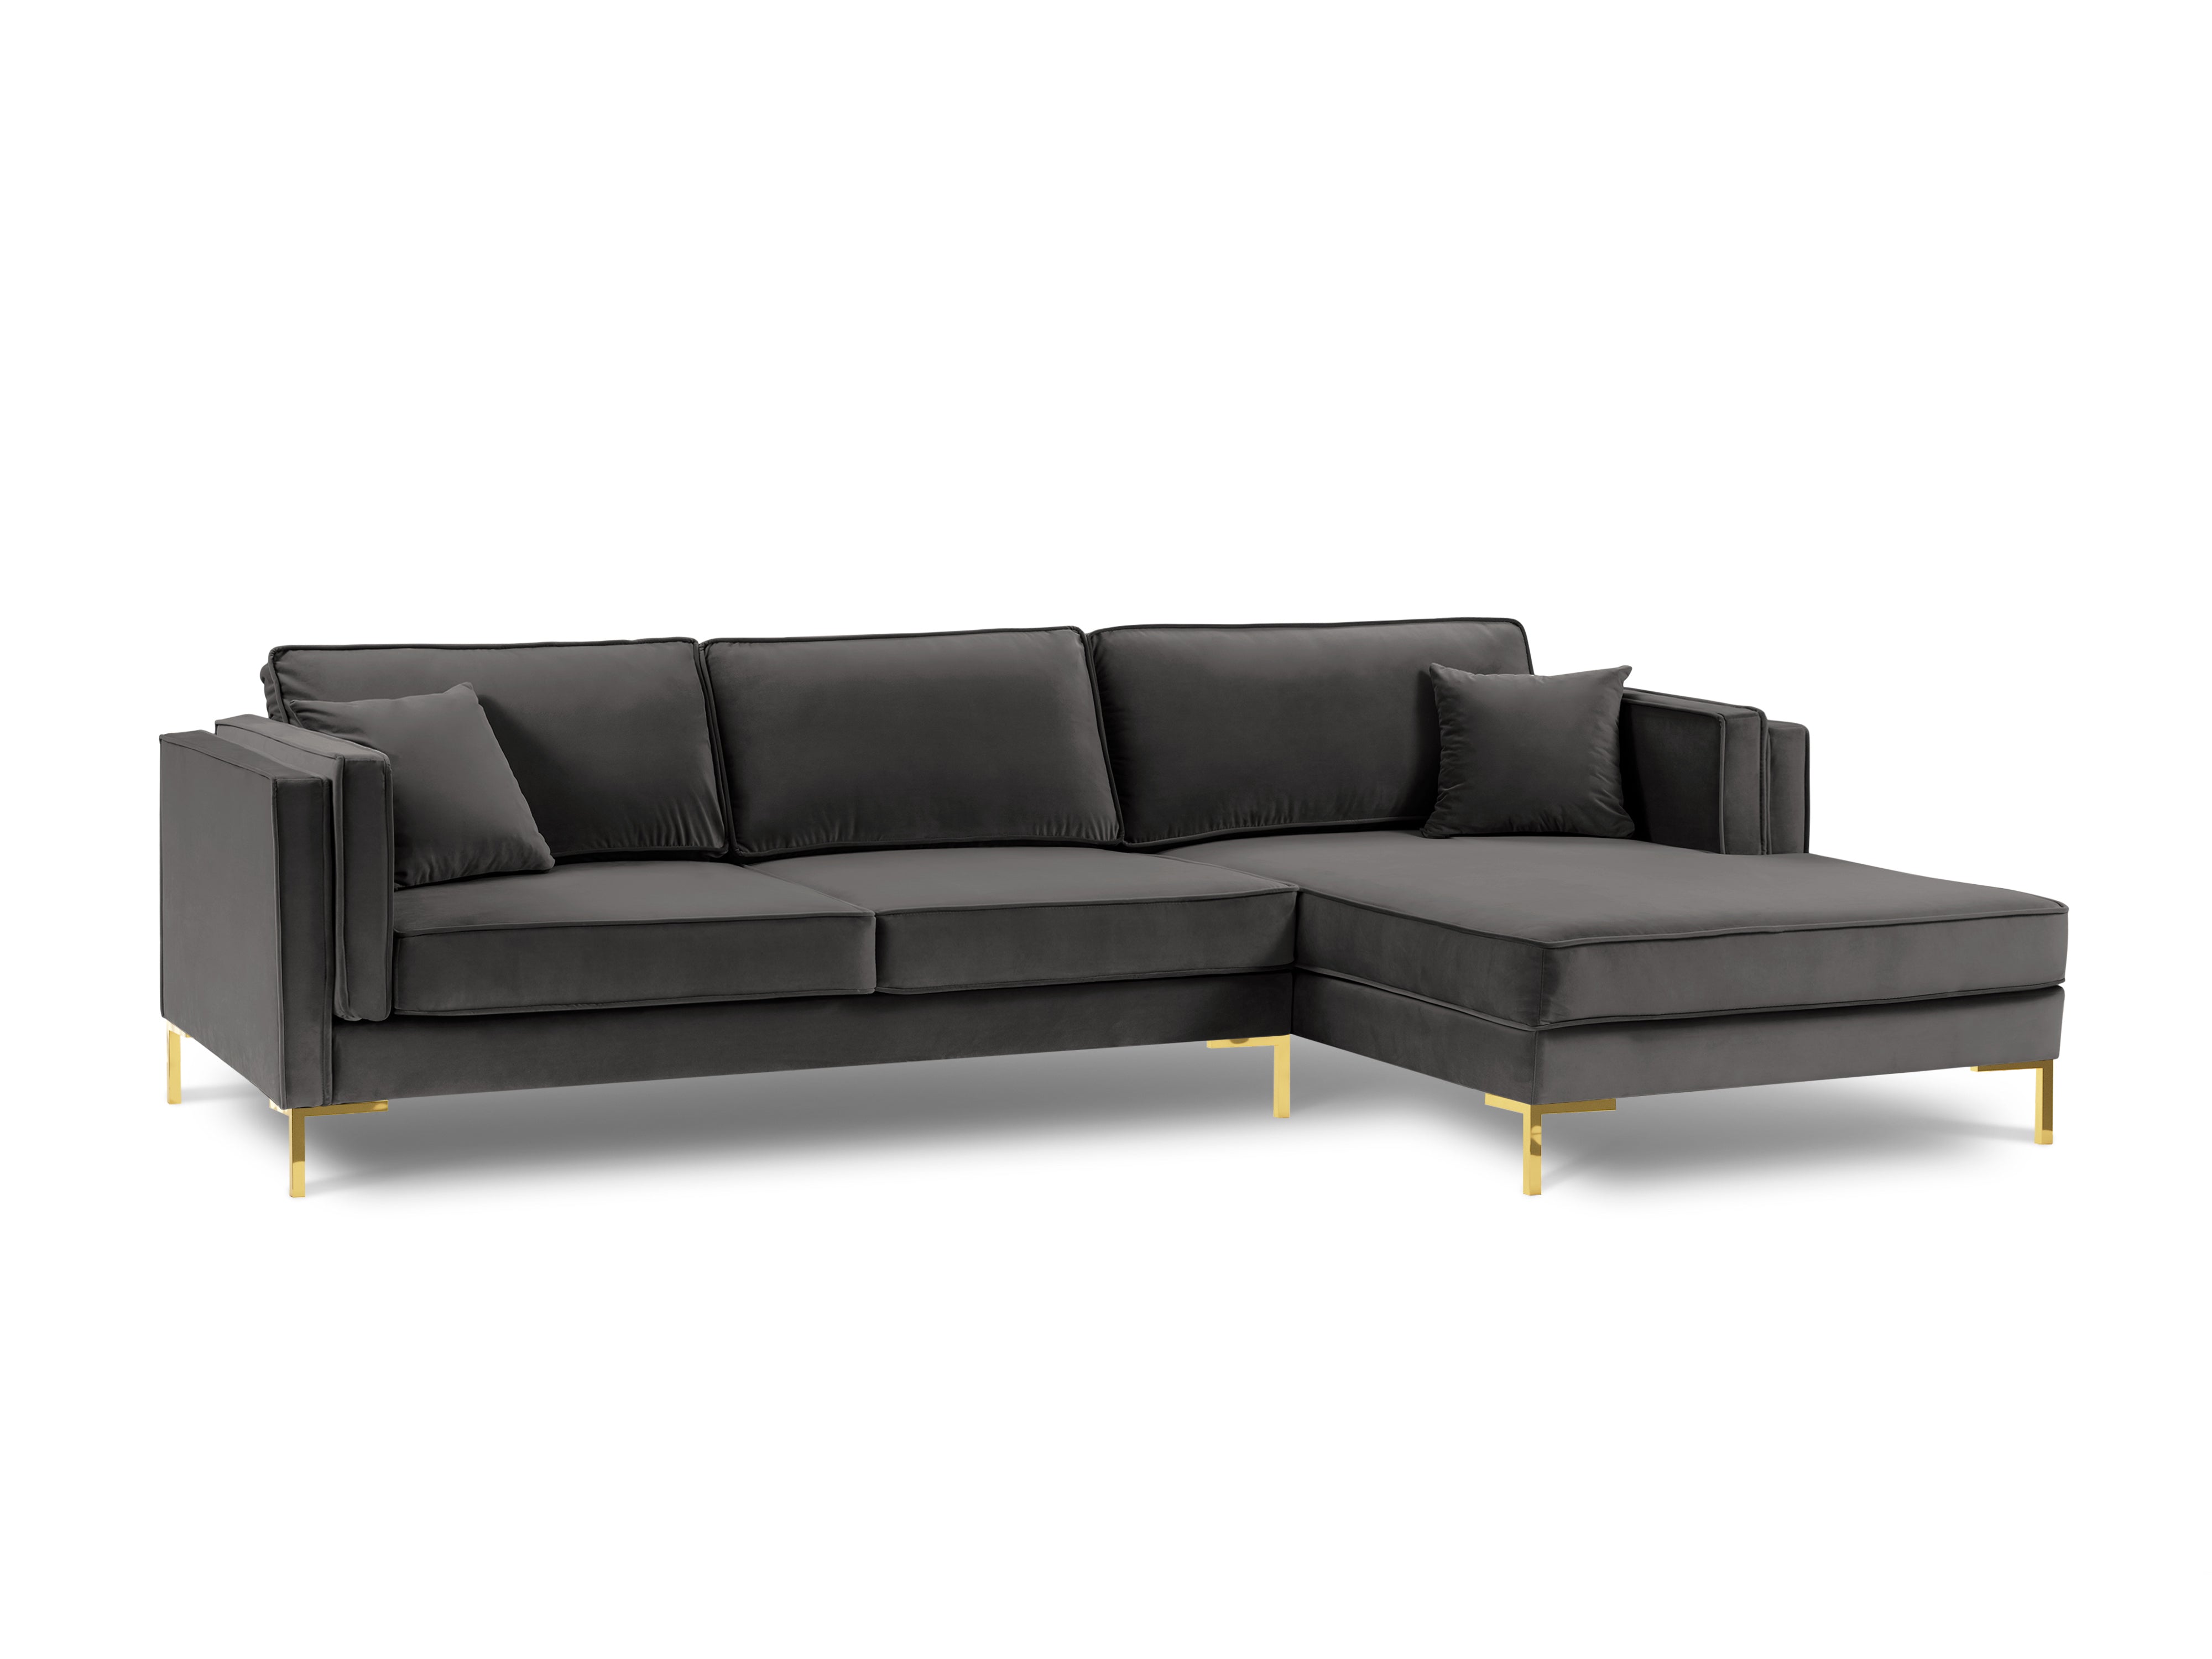 LUIS dark grey velvet right-hand corner sofa in with gold base